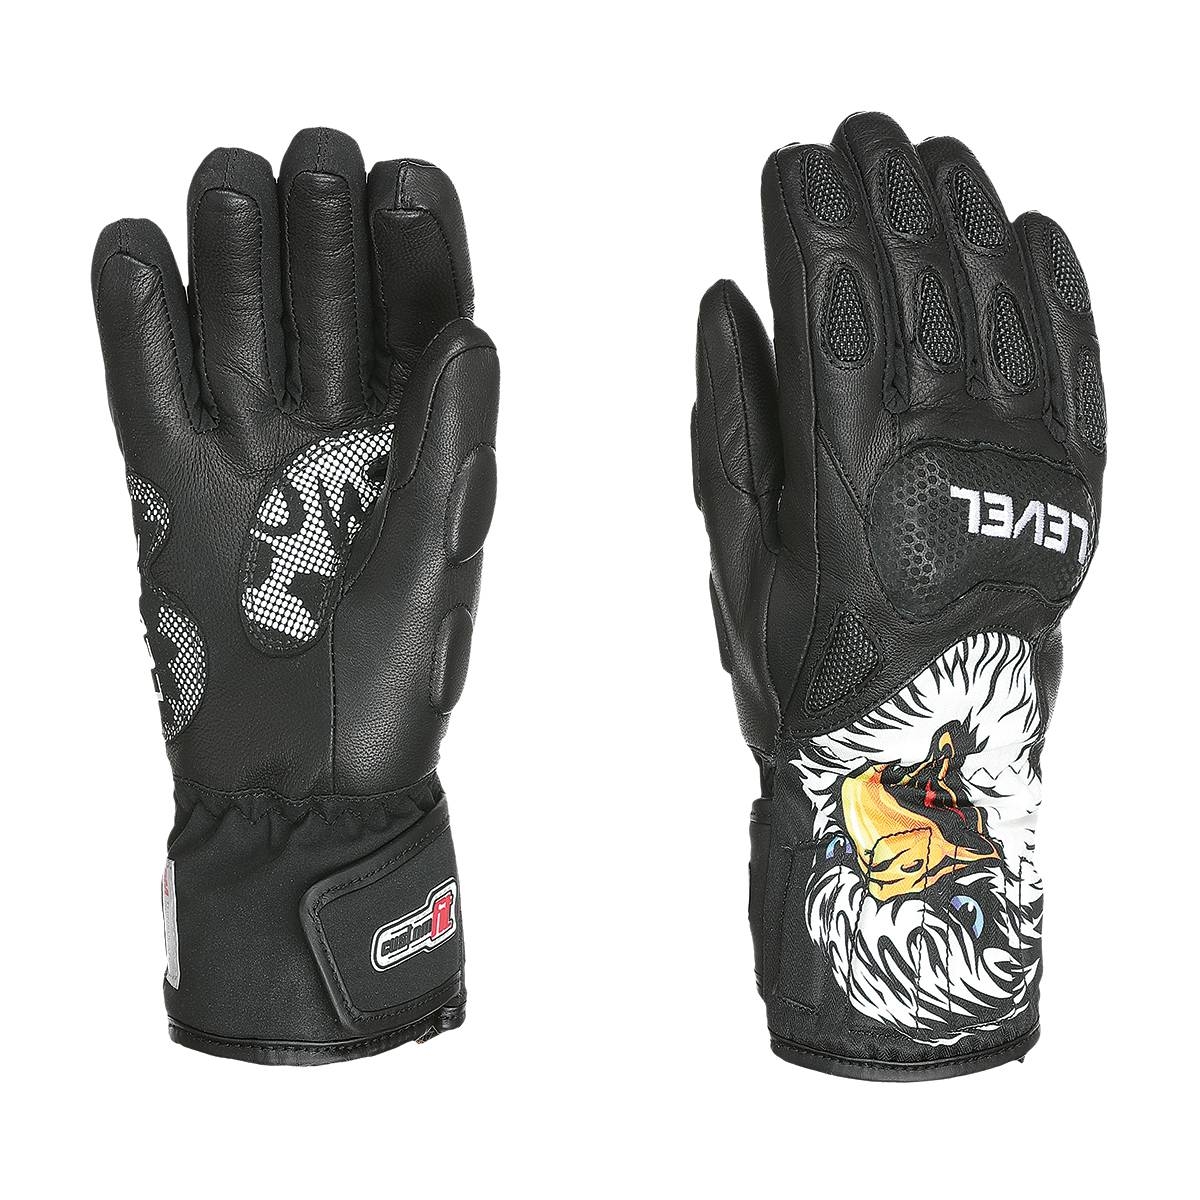 Grease Monkey Indoor/outdoor Mechanic Grip Gloves Black Xl 1 Pair